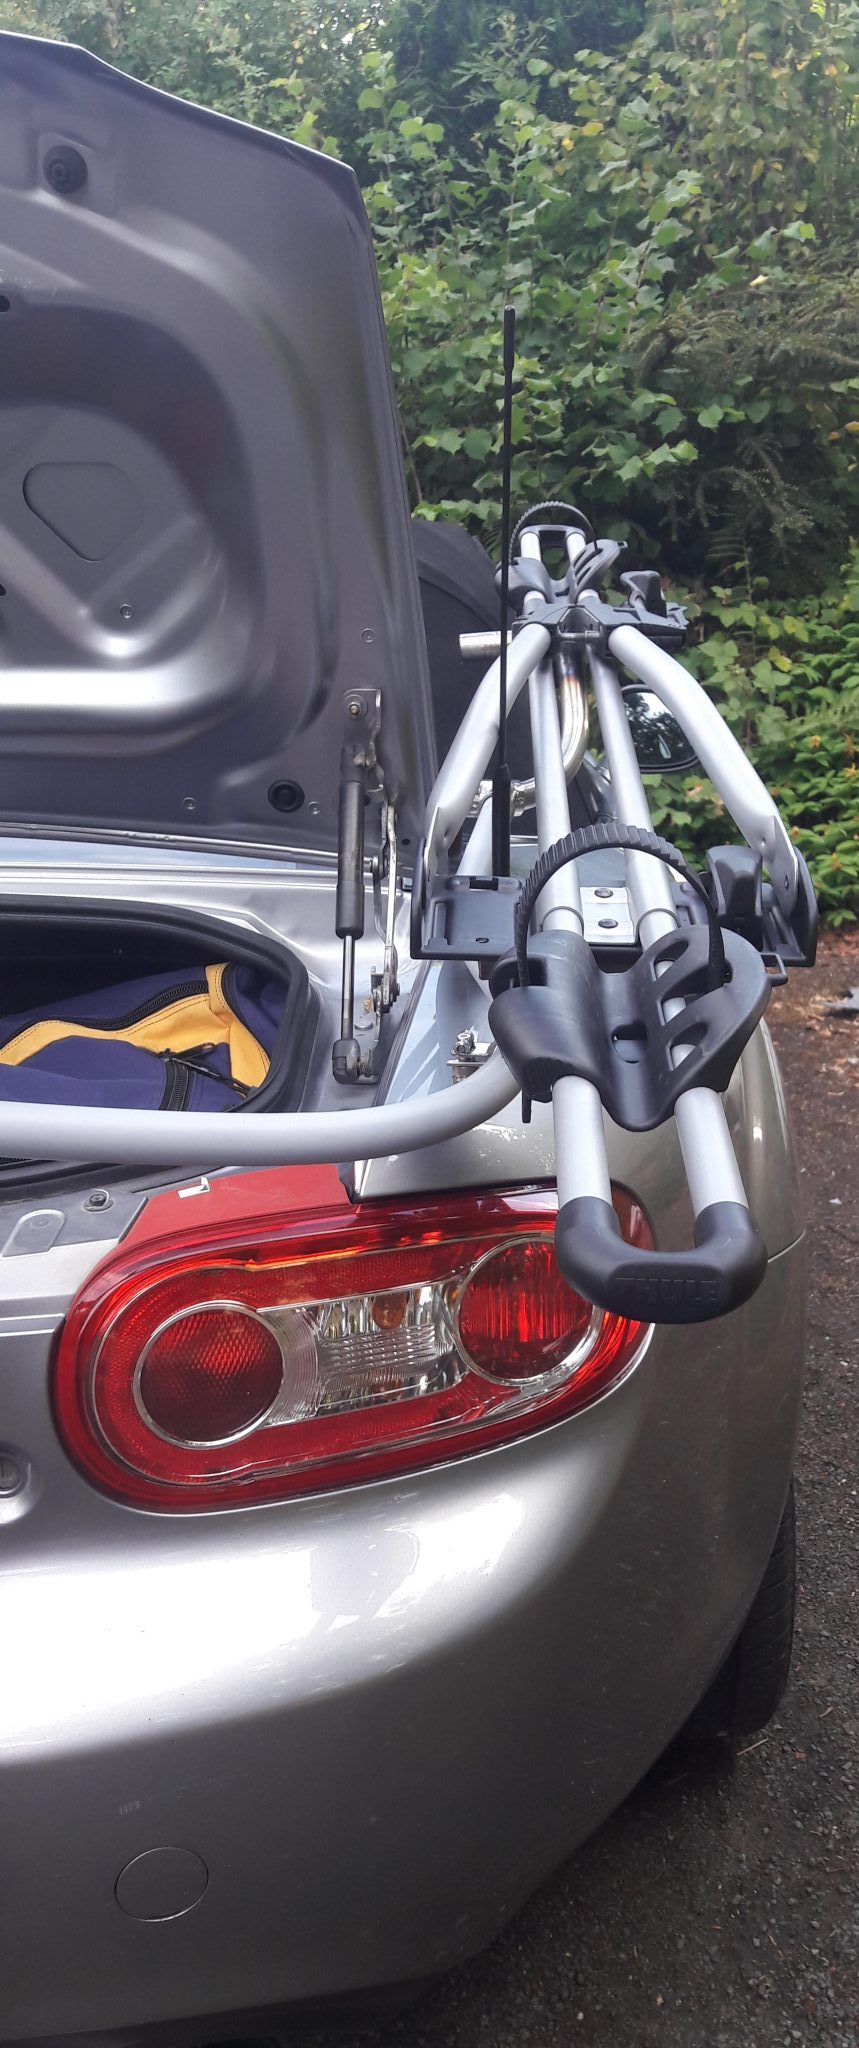 MantaMount-MX5-Bike-Luggage-Spare-Wheel-Rack-z-Luggage-Rack-and-2-wheel-carrier-mounted-reverse-e1532344859444.jpg